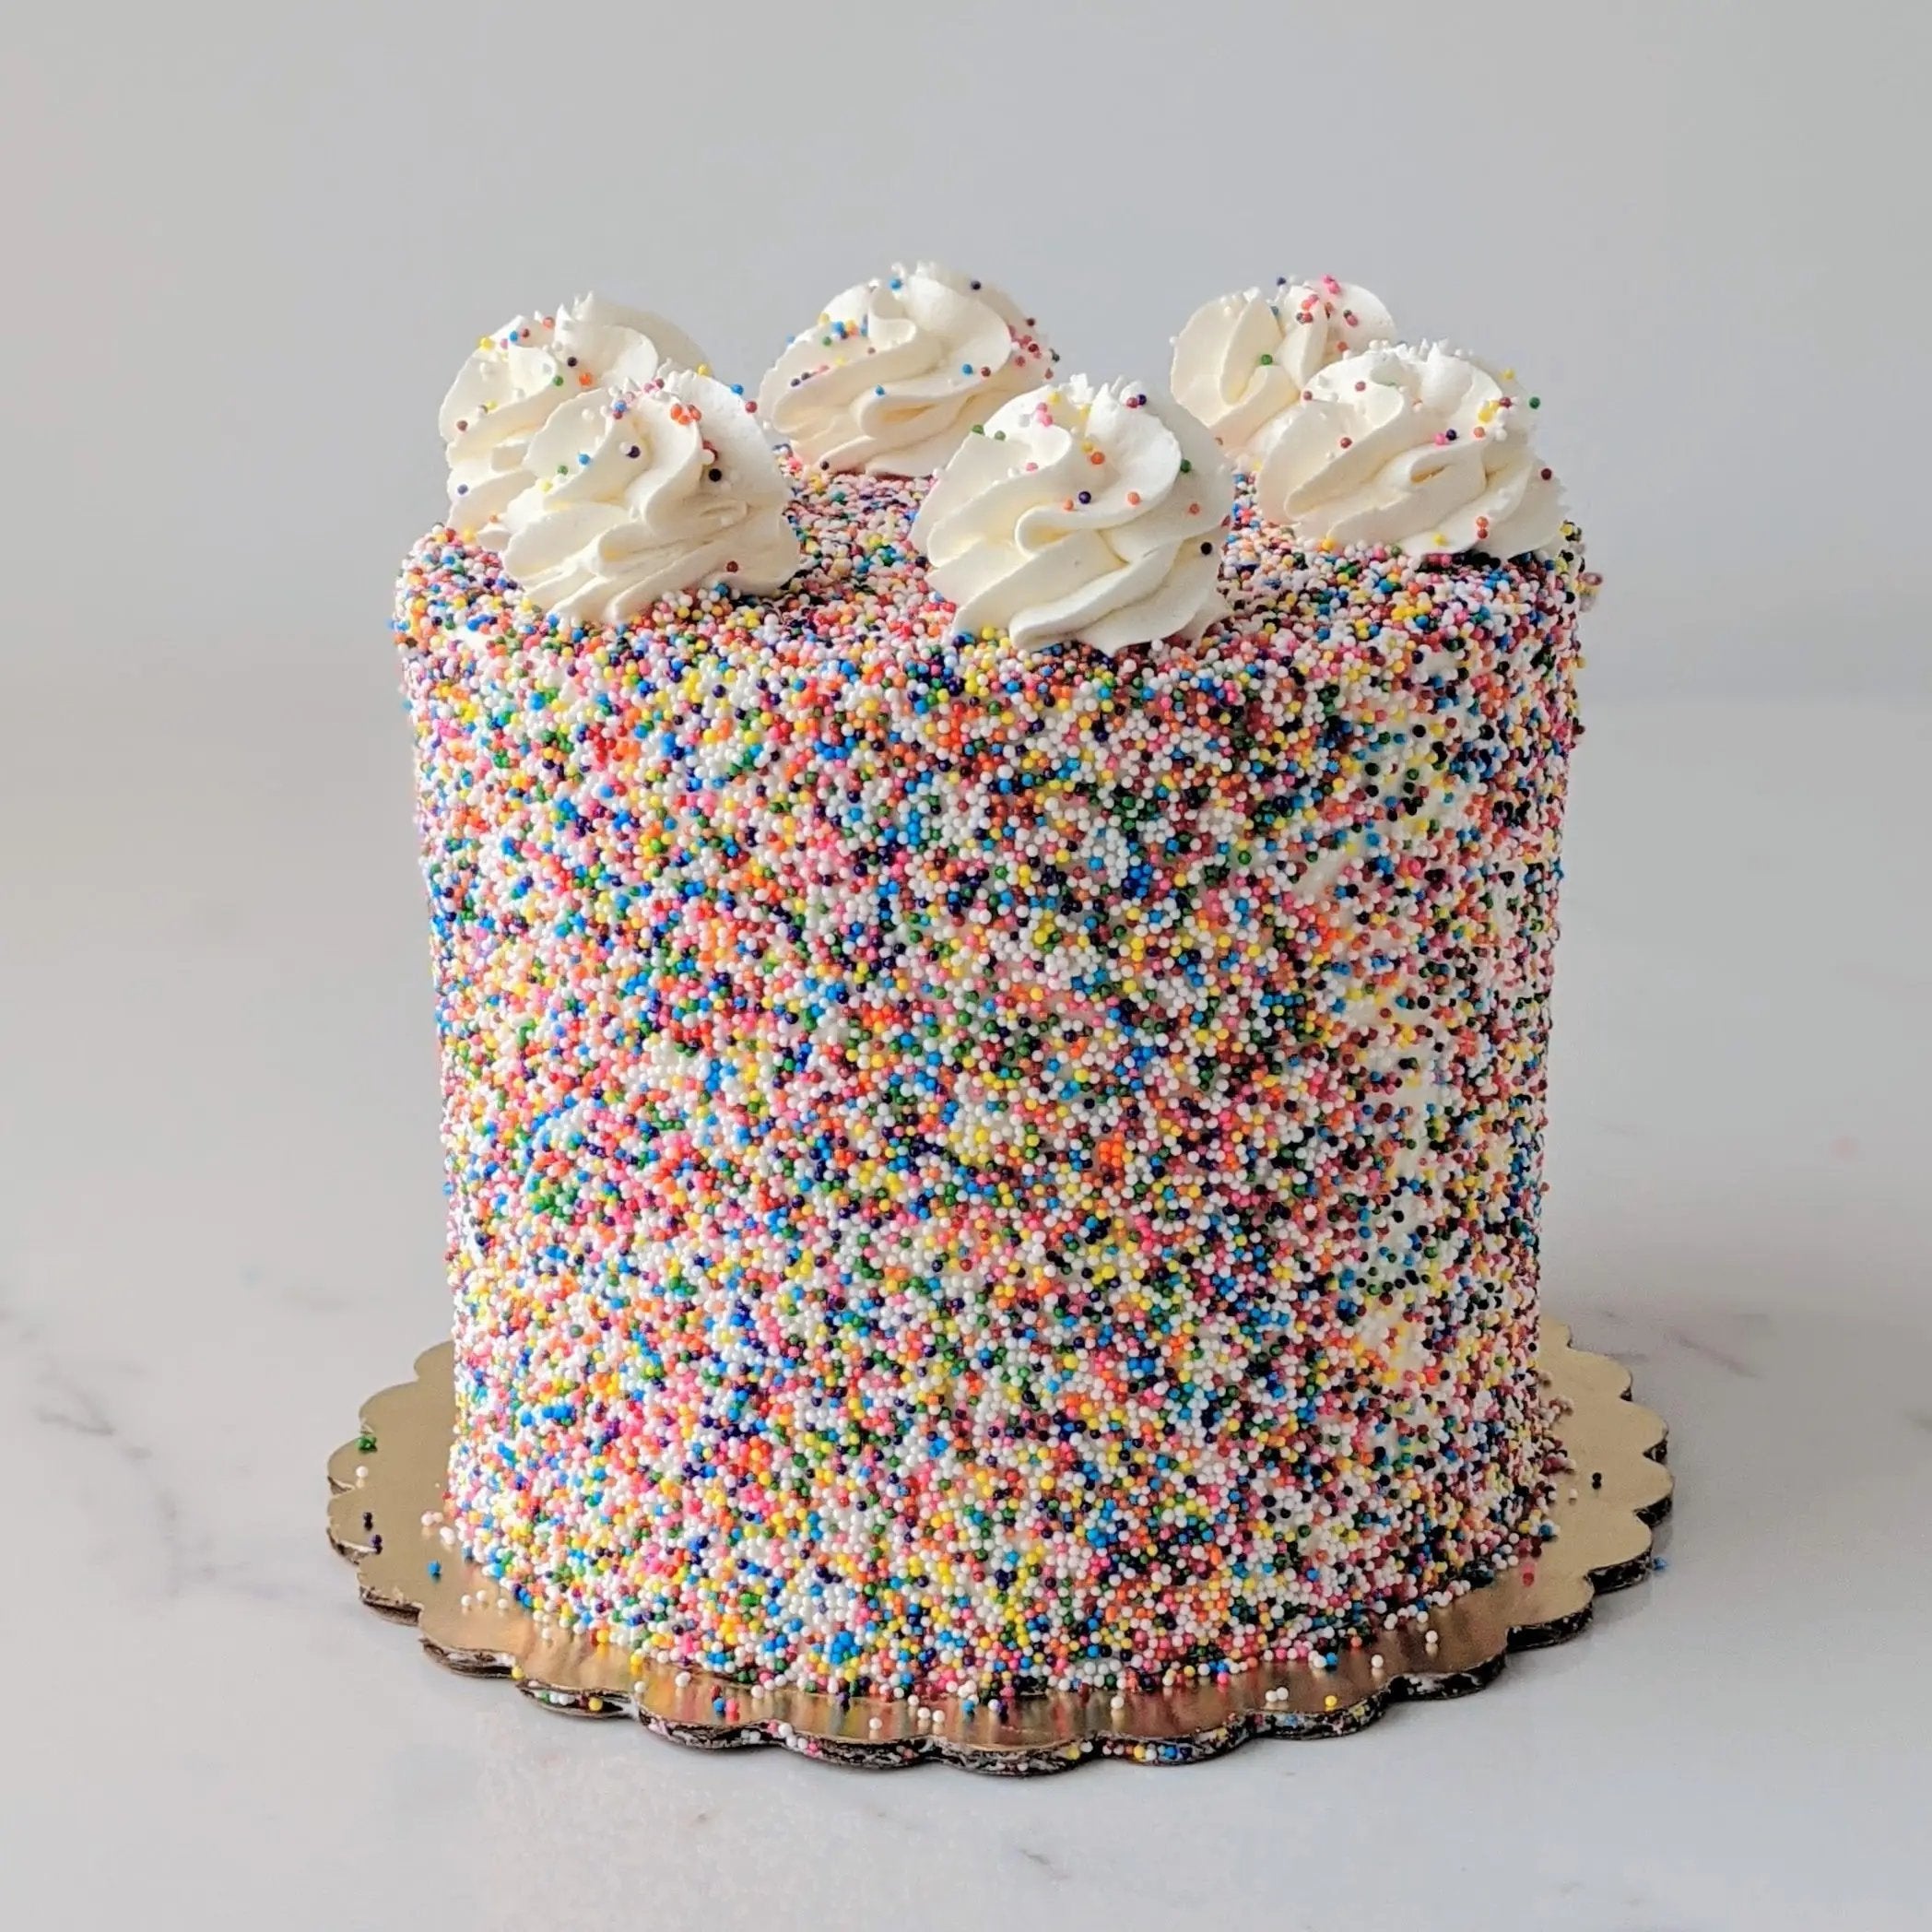 Funfetti Cake with Rainbow Sprinkles